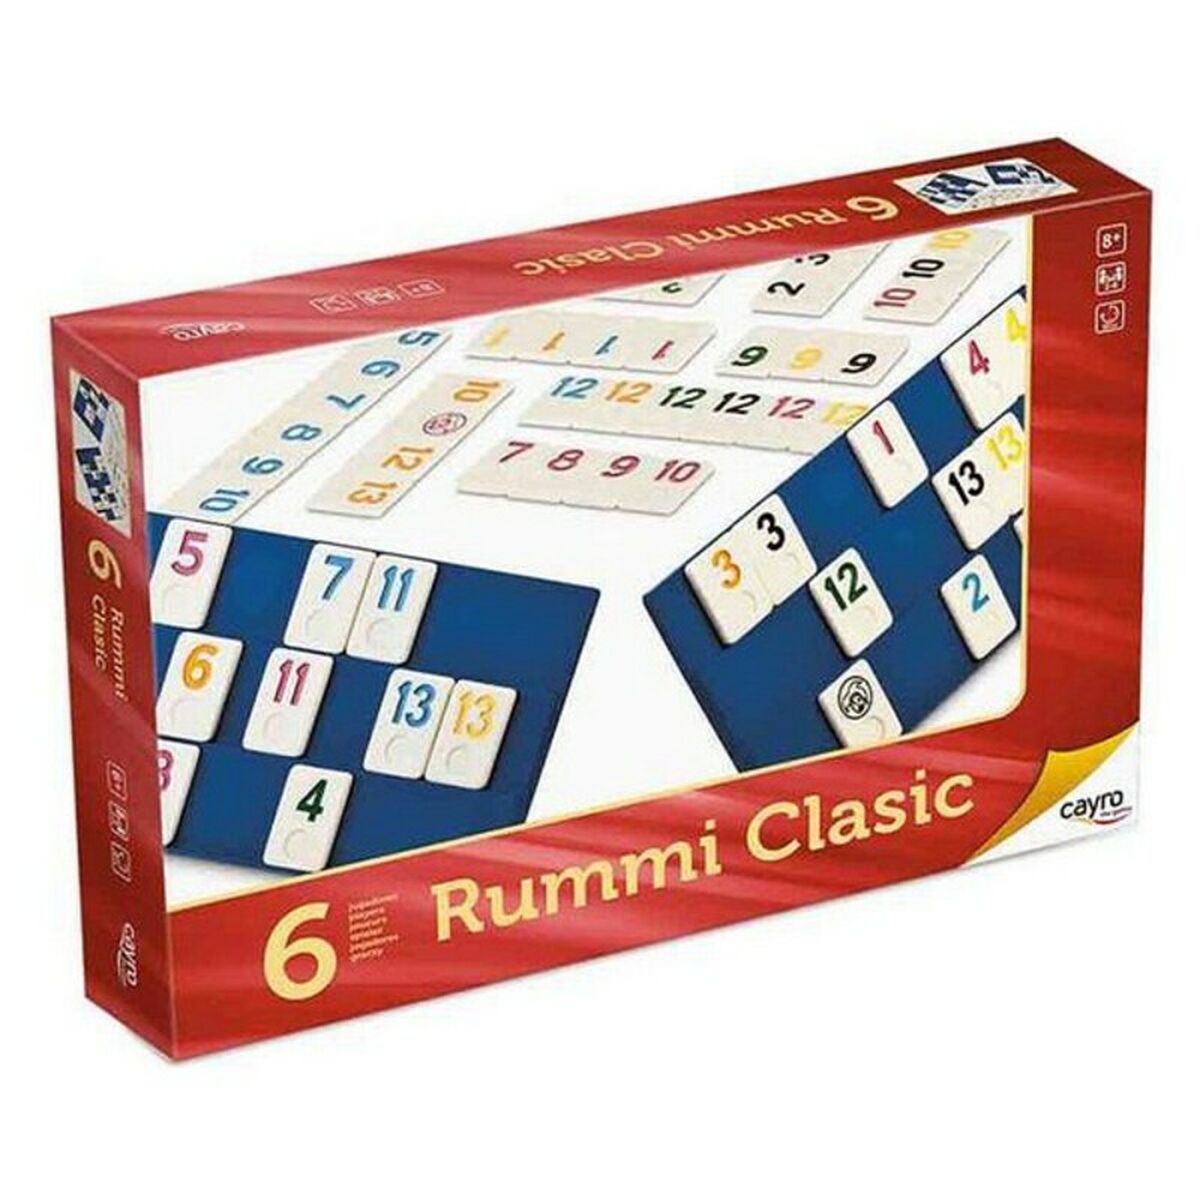 Sällskapsspel Rummi Classic Cayro (ES-PT-EN-FR-IT-DE) (ES-PT-EN-FR-IT-GR) (35 x 26 x 6 cm)